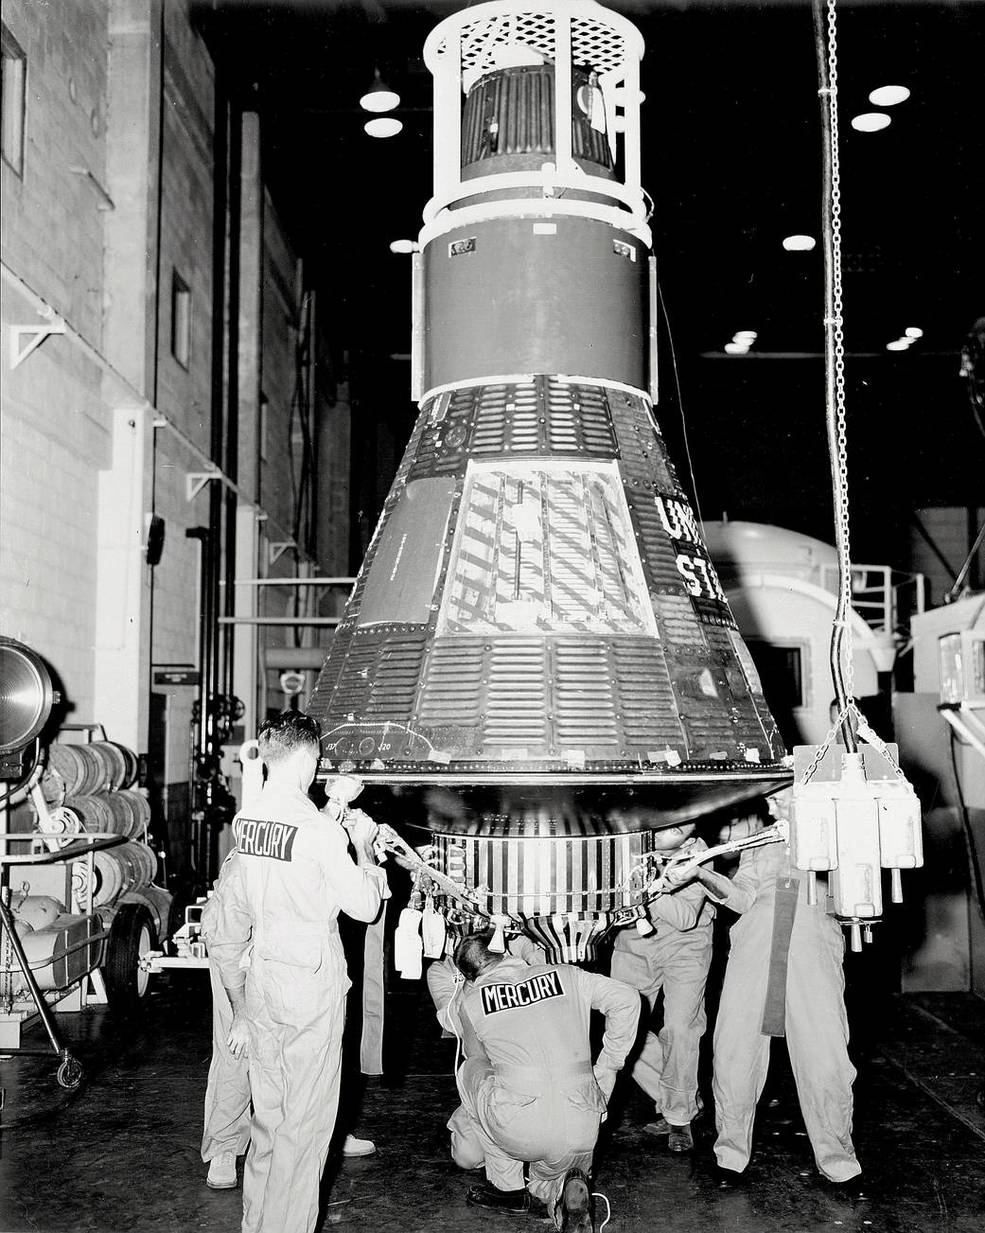 In September 1963, engineers and technicians in Hangar S, prepare the Mercury 8 capsule named "Sigma 7."